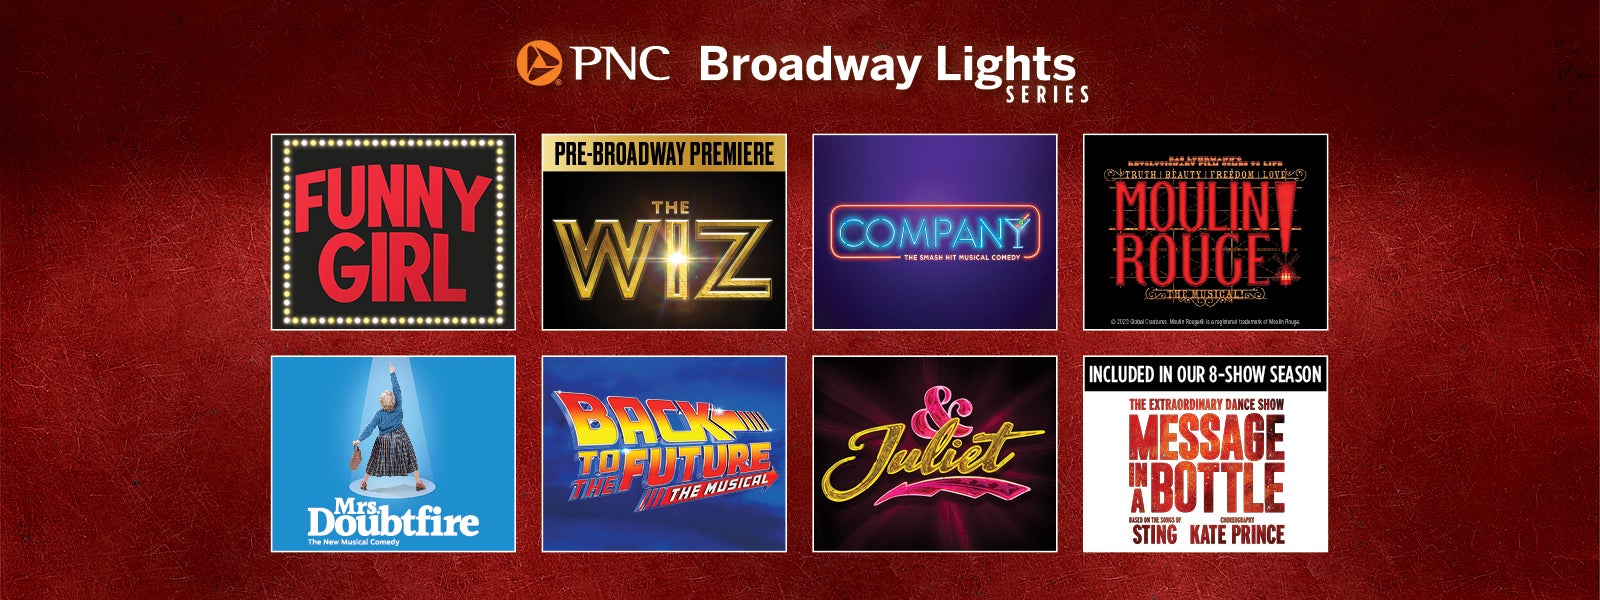 202324 PNC Broadway Lights Blumenthal Performing Arts